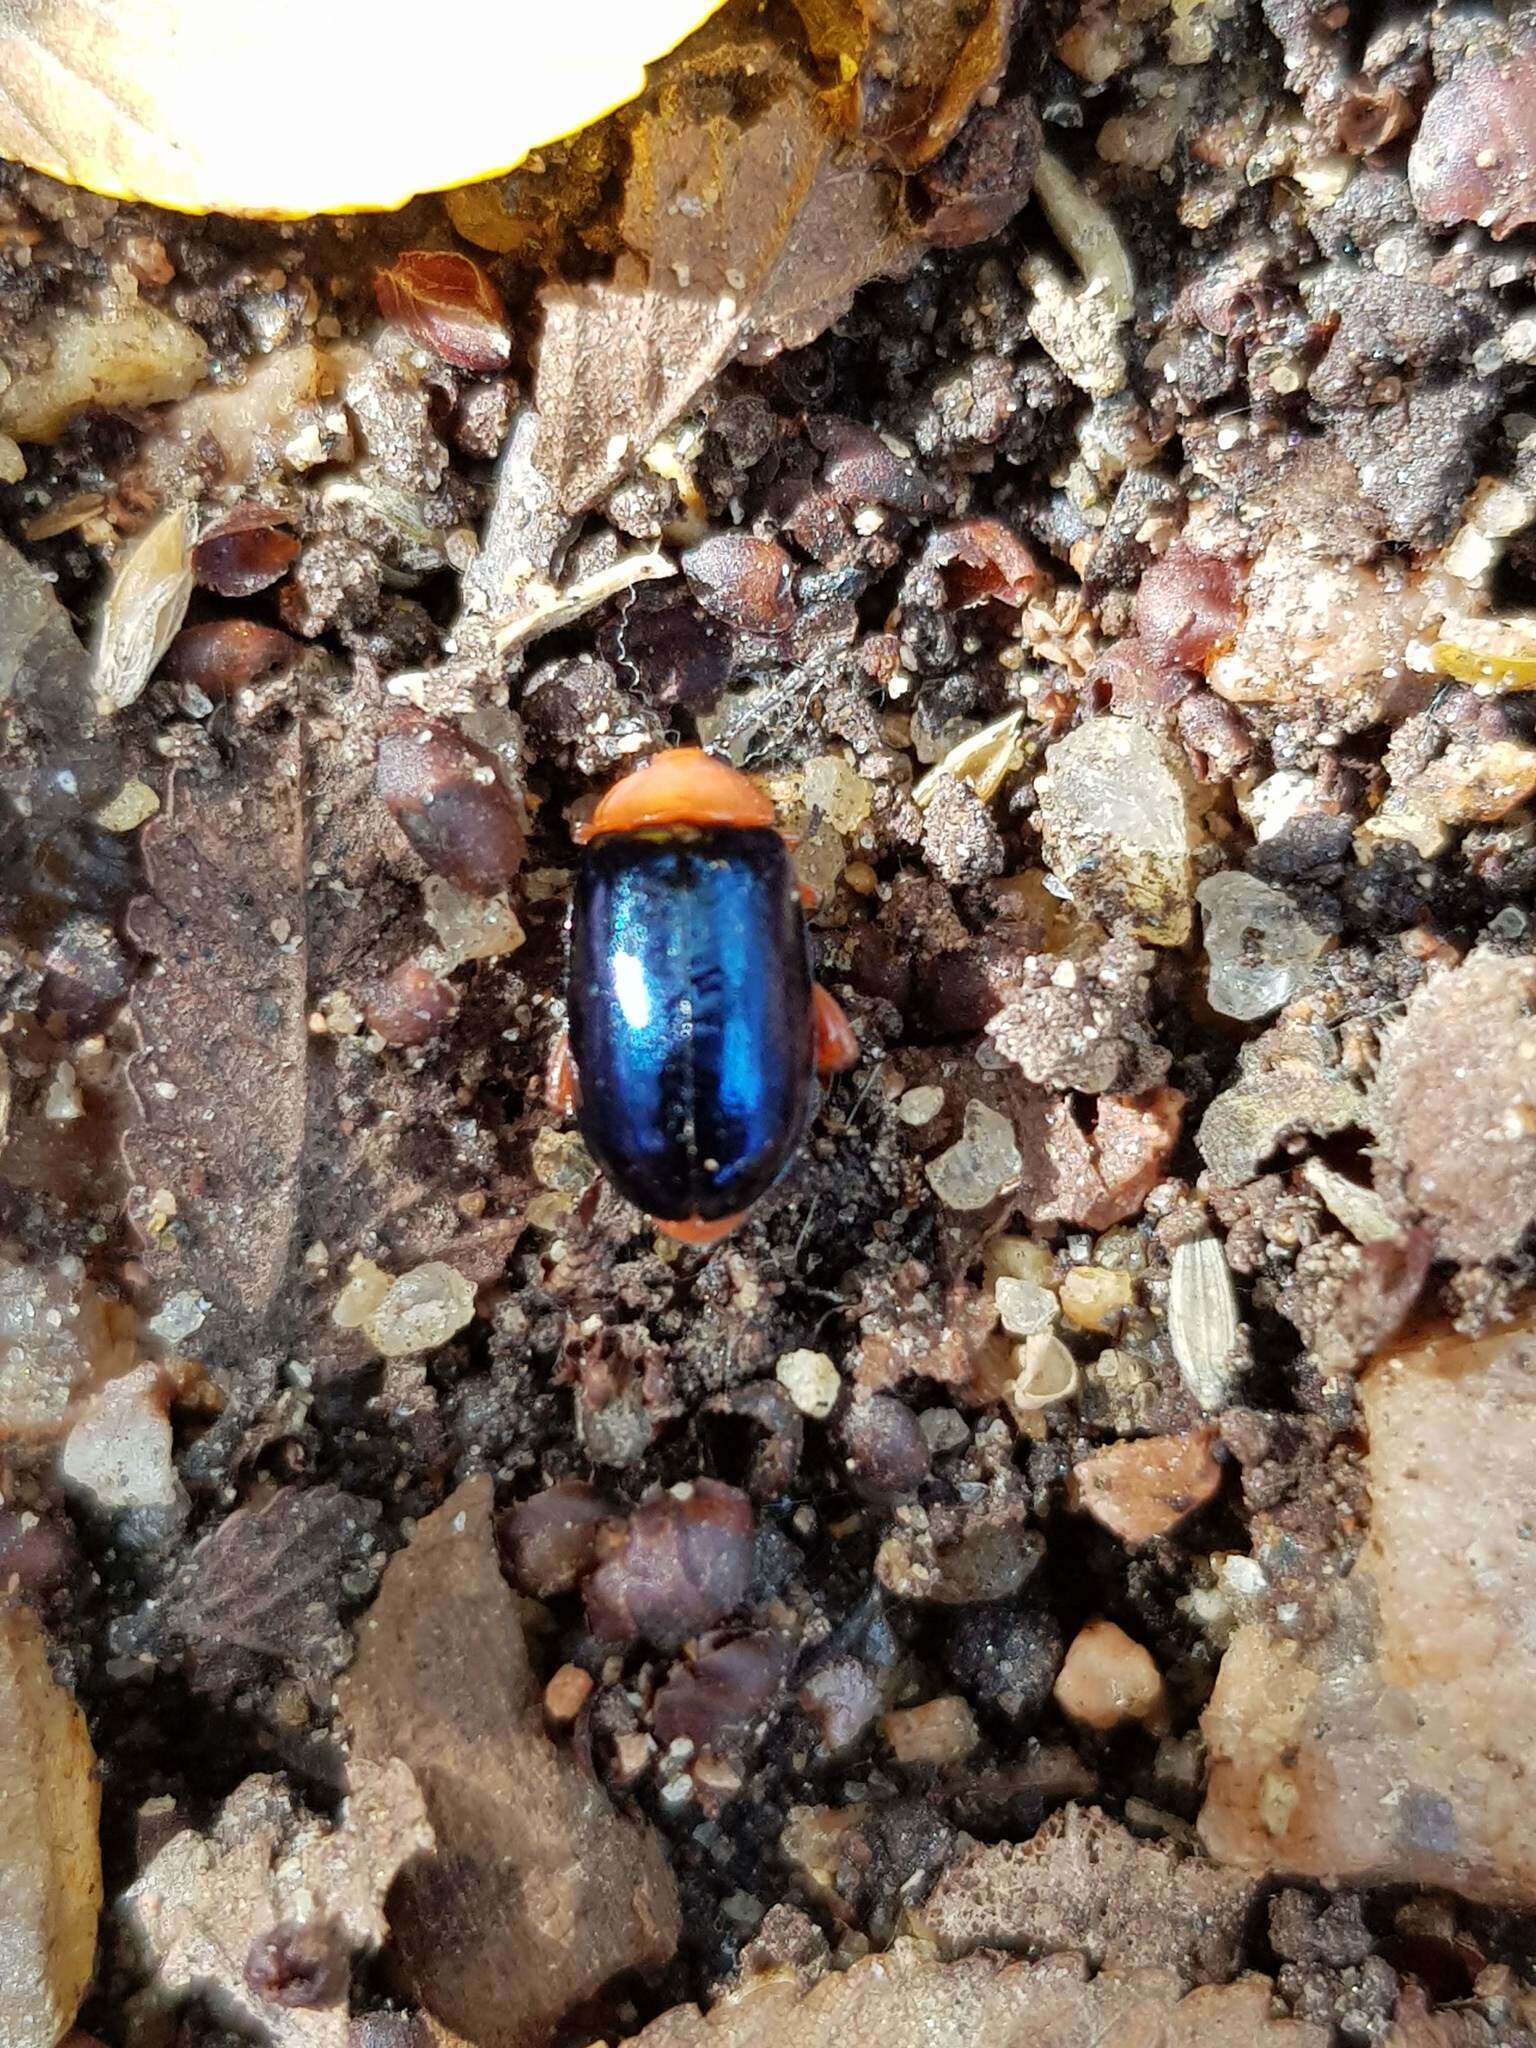 Image of Shiny Flea Beetle